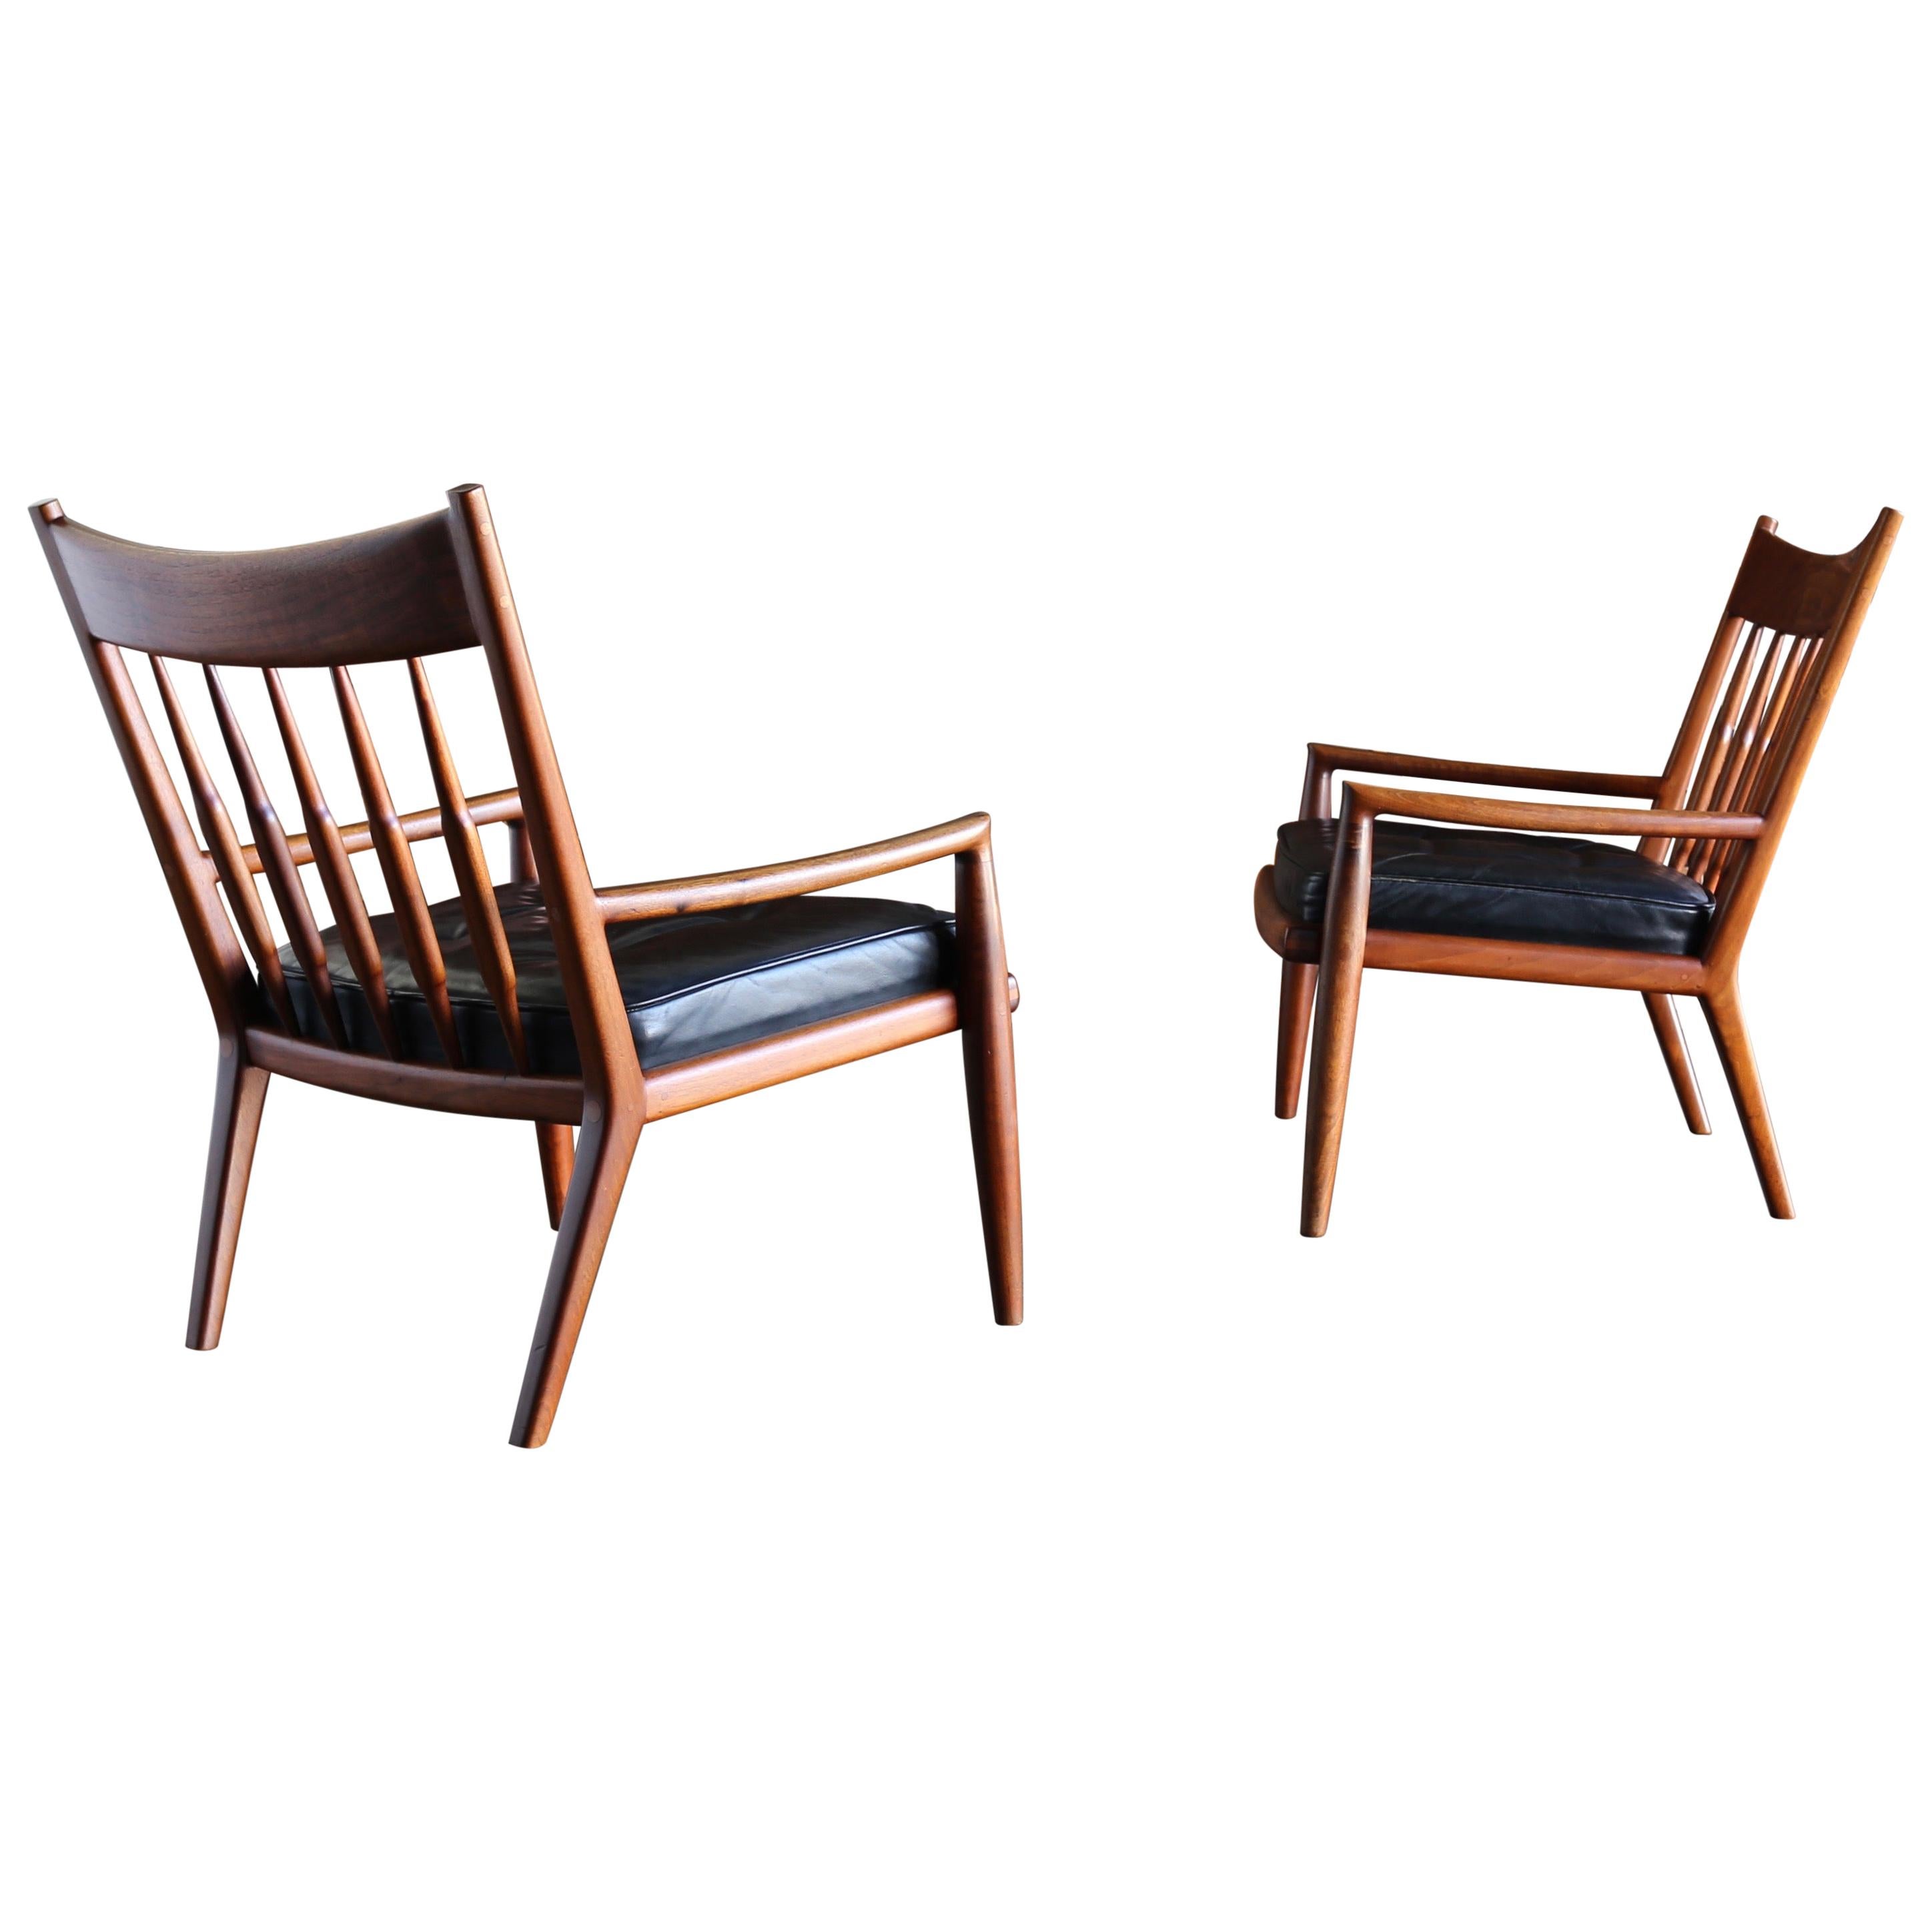 John Nyquist Handcrafted Walnut Lounge Chairs, circa 1970